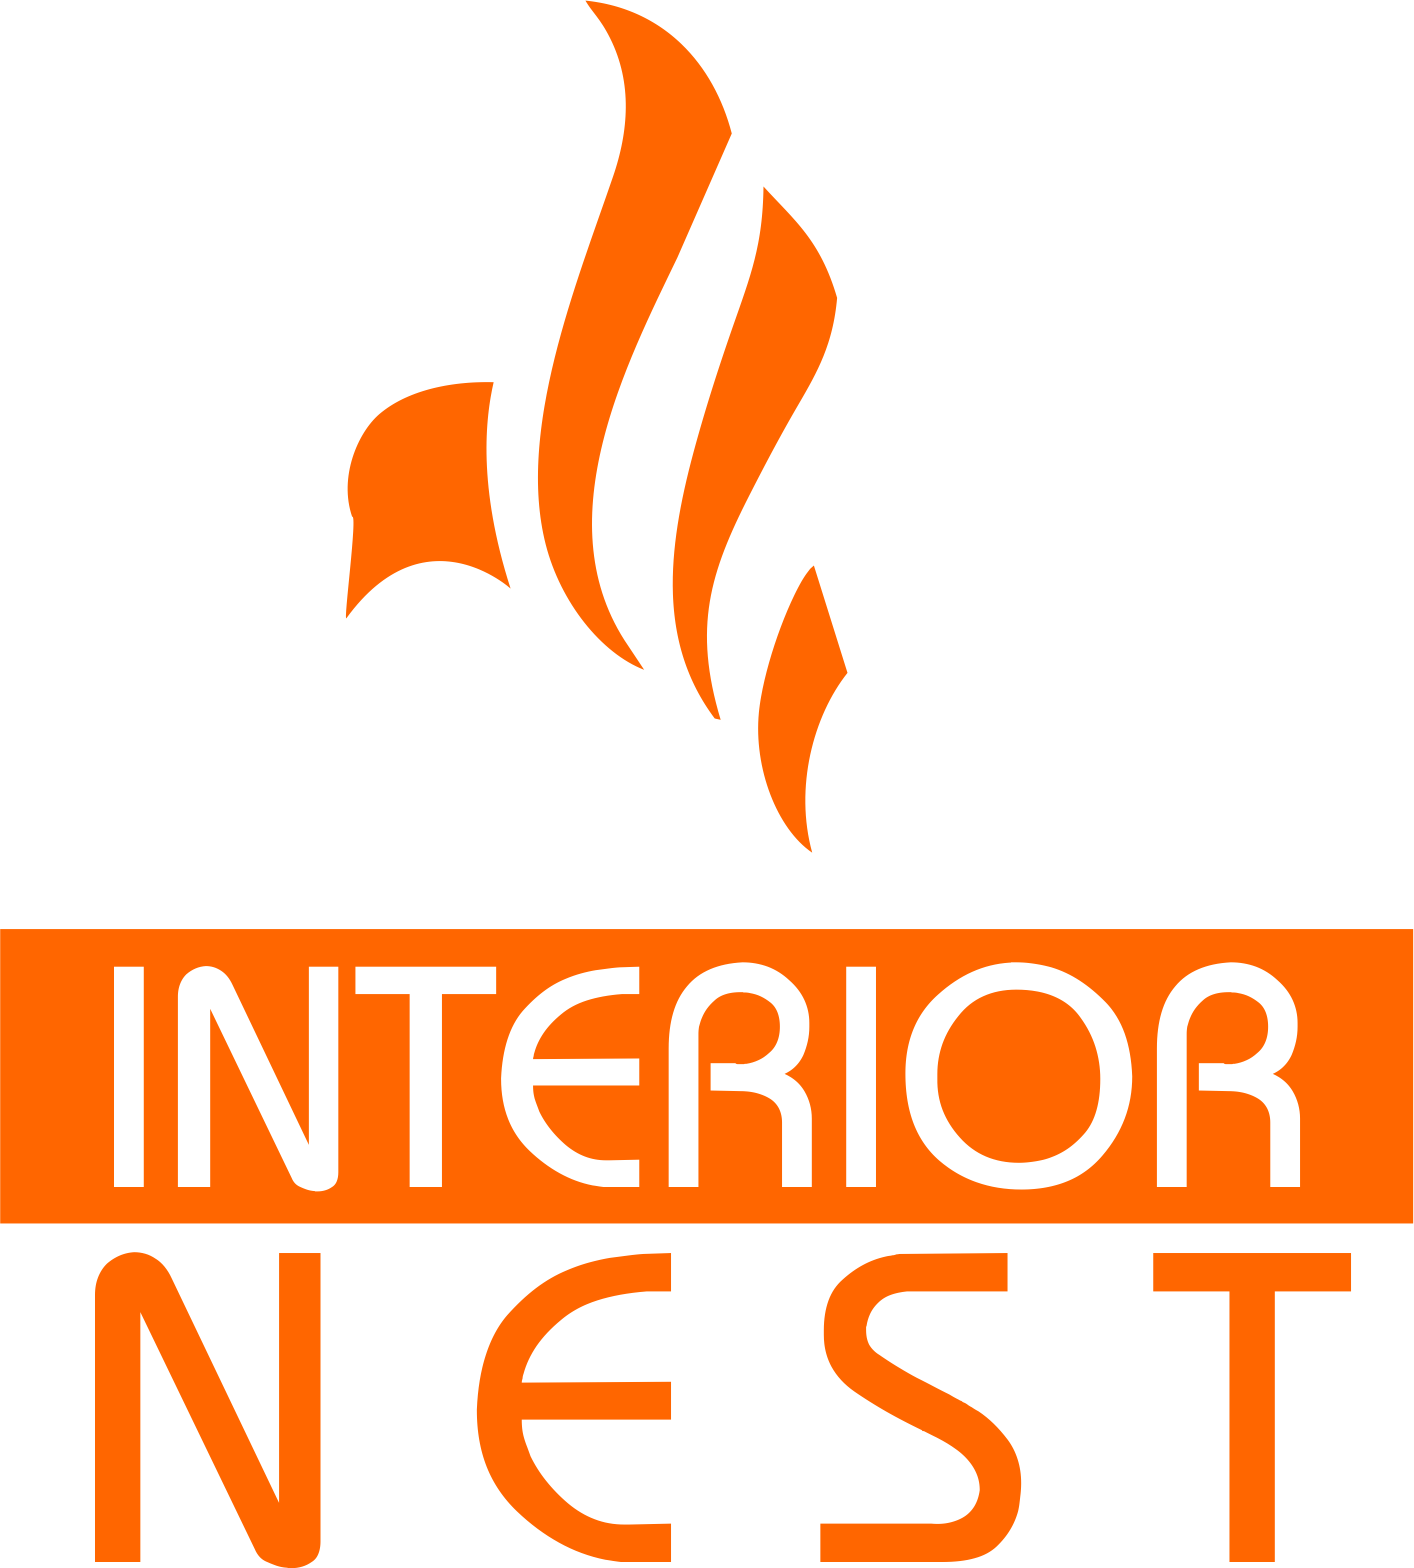 Interior Design, Interior Nest, Interior Design in Maharashtra, Interior Design in Nashik